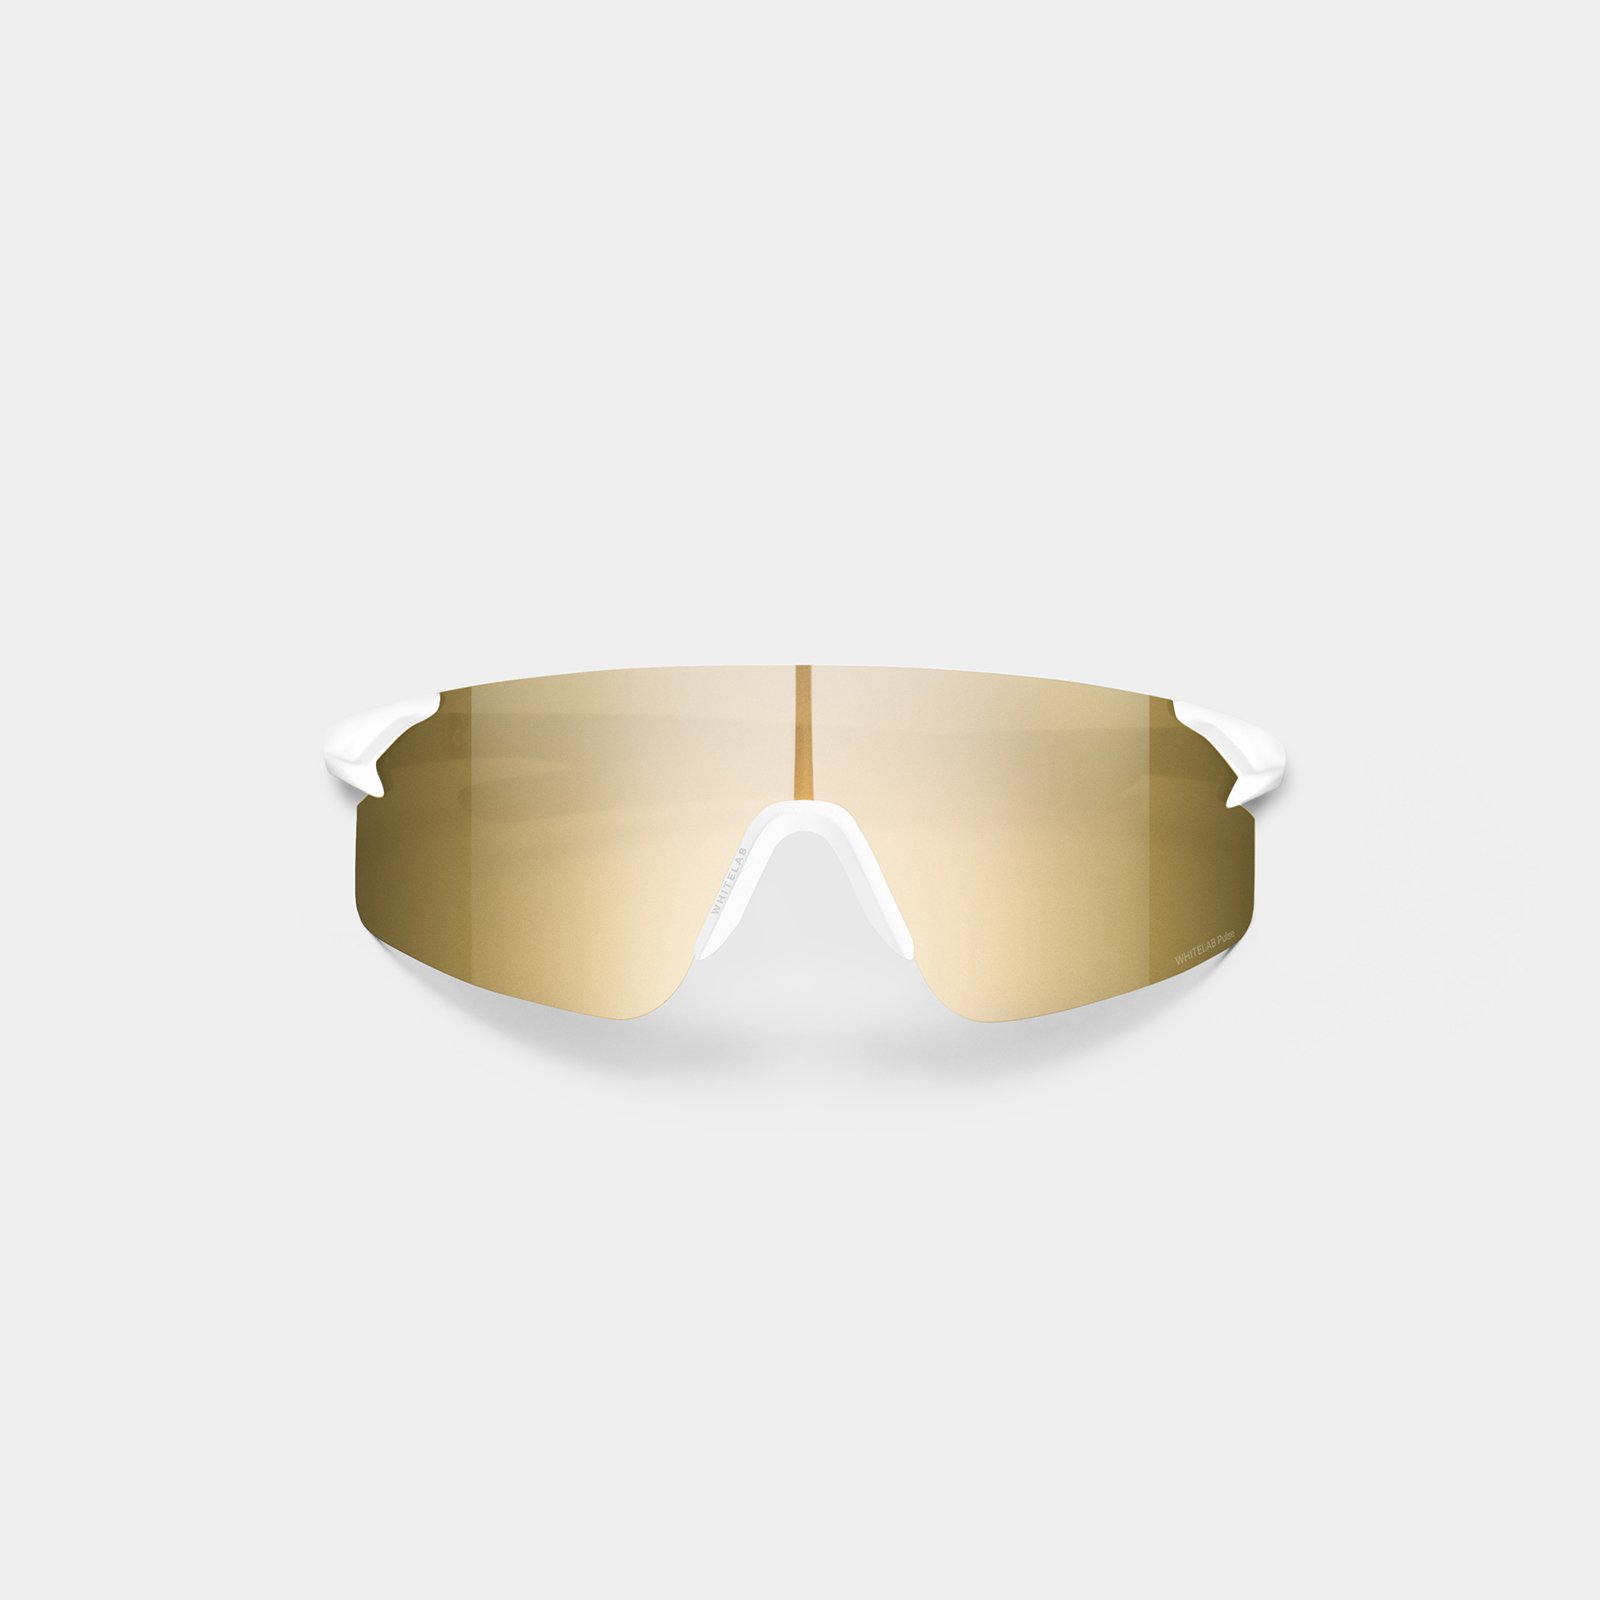  оранжевые солнцезащитные очки White Lab Visor Visor white/bronze - цена, описание, фото 1